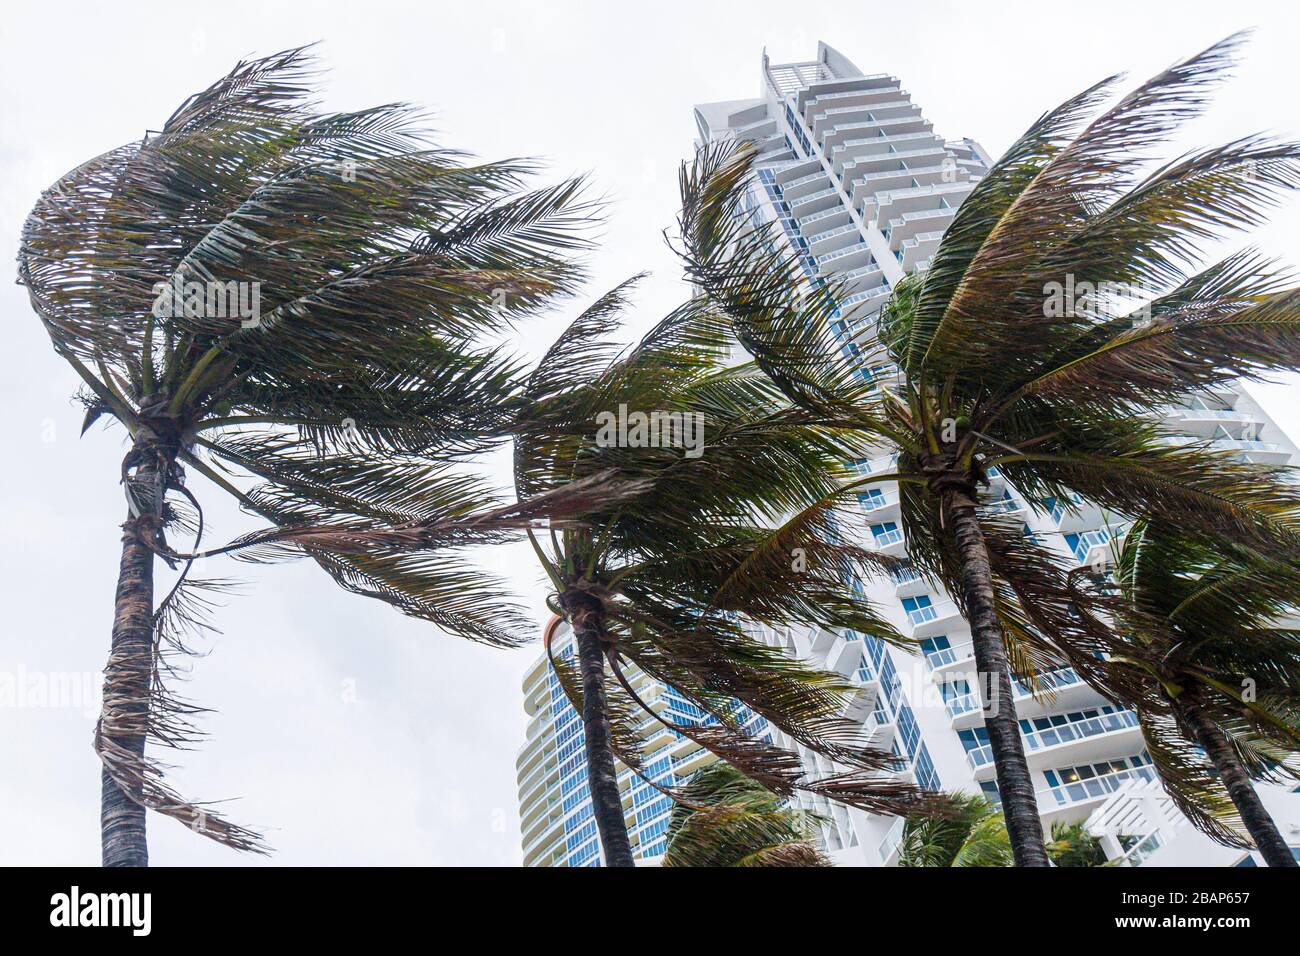 Miami Beach Florida,palm trees,windblown,blowing in wind,tropical storm,hurricane,high winds,Continuum,high rise,condominiums,FL111014061 Stock Photo